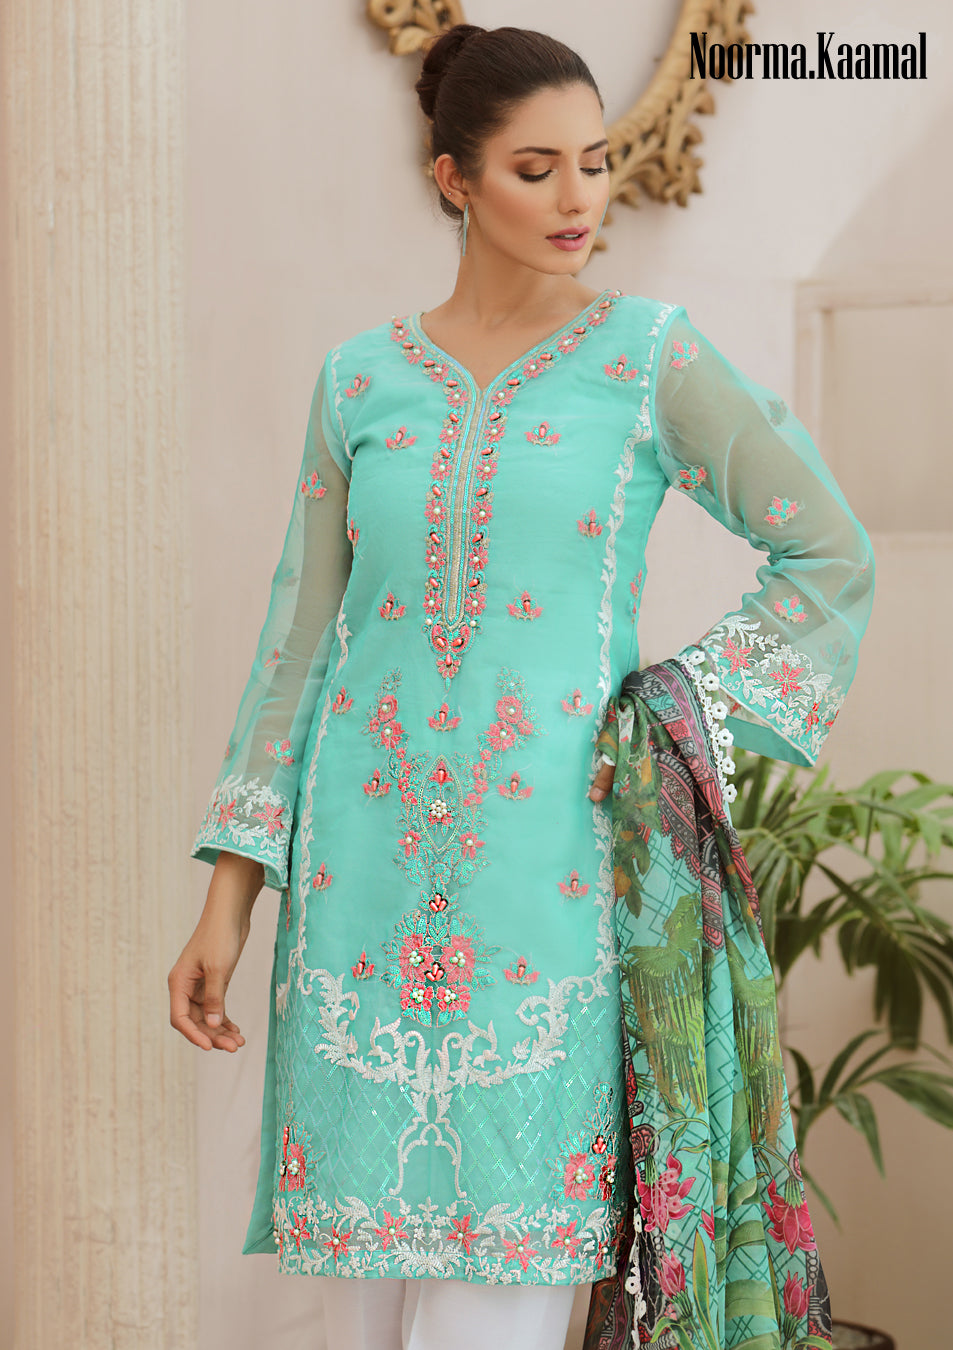 Winter Collection - Noorma Kaamal - Tehwaar - Festive - NKOT#09 available at Saleem Fabrics Traditions